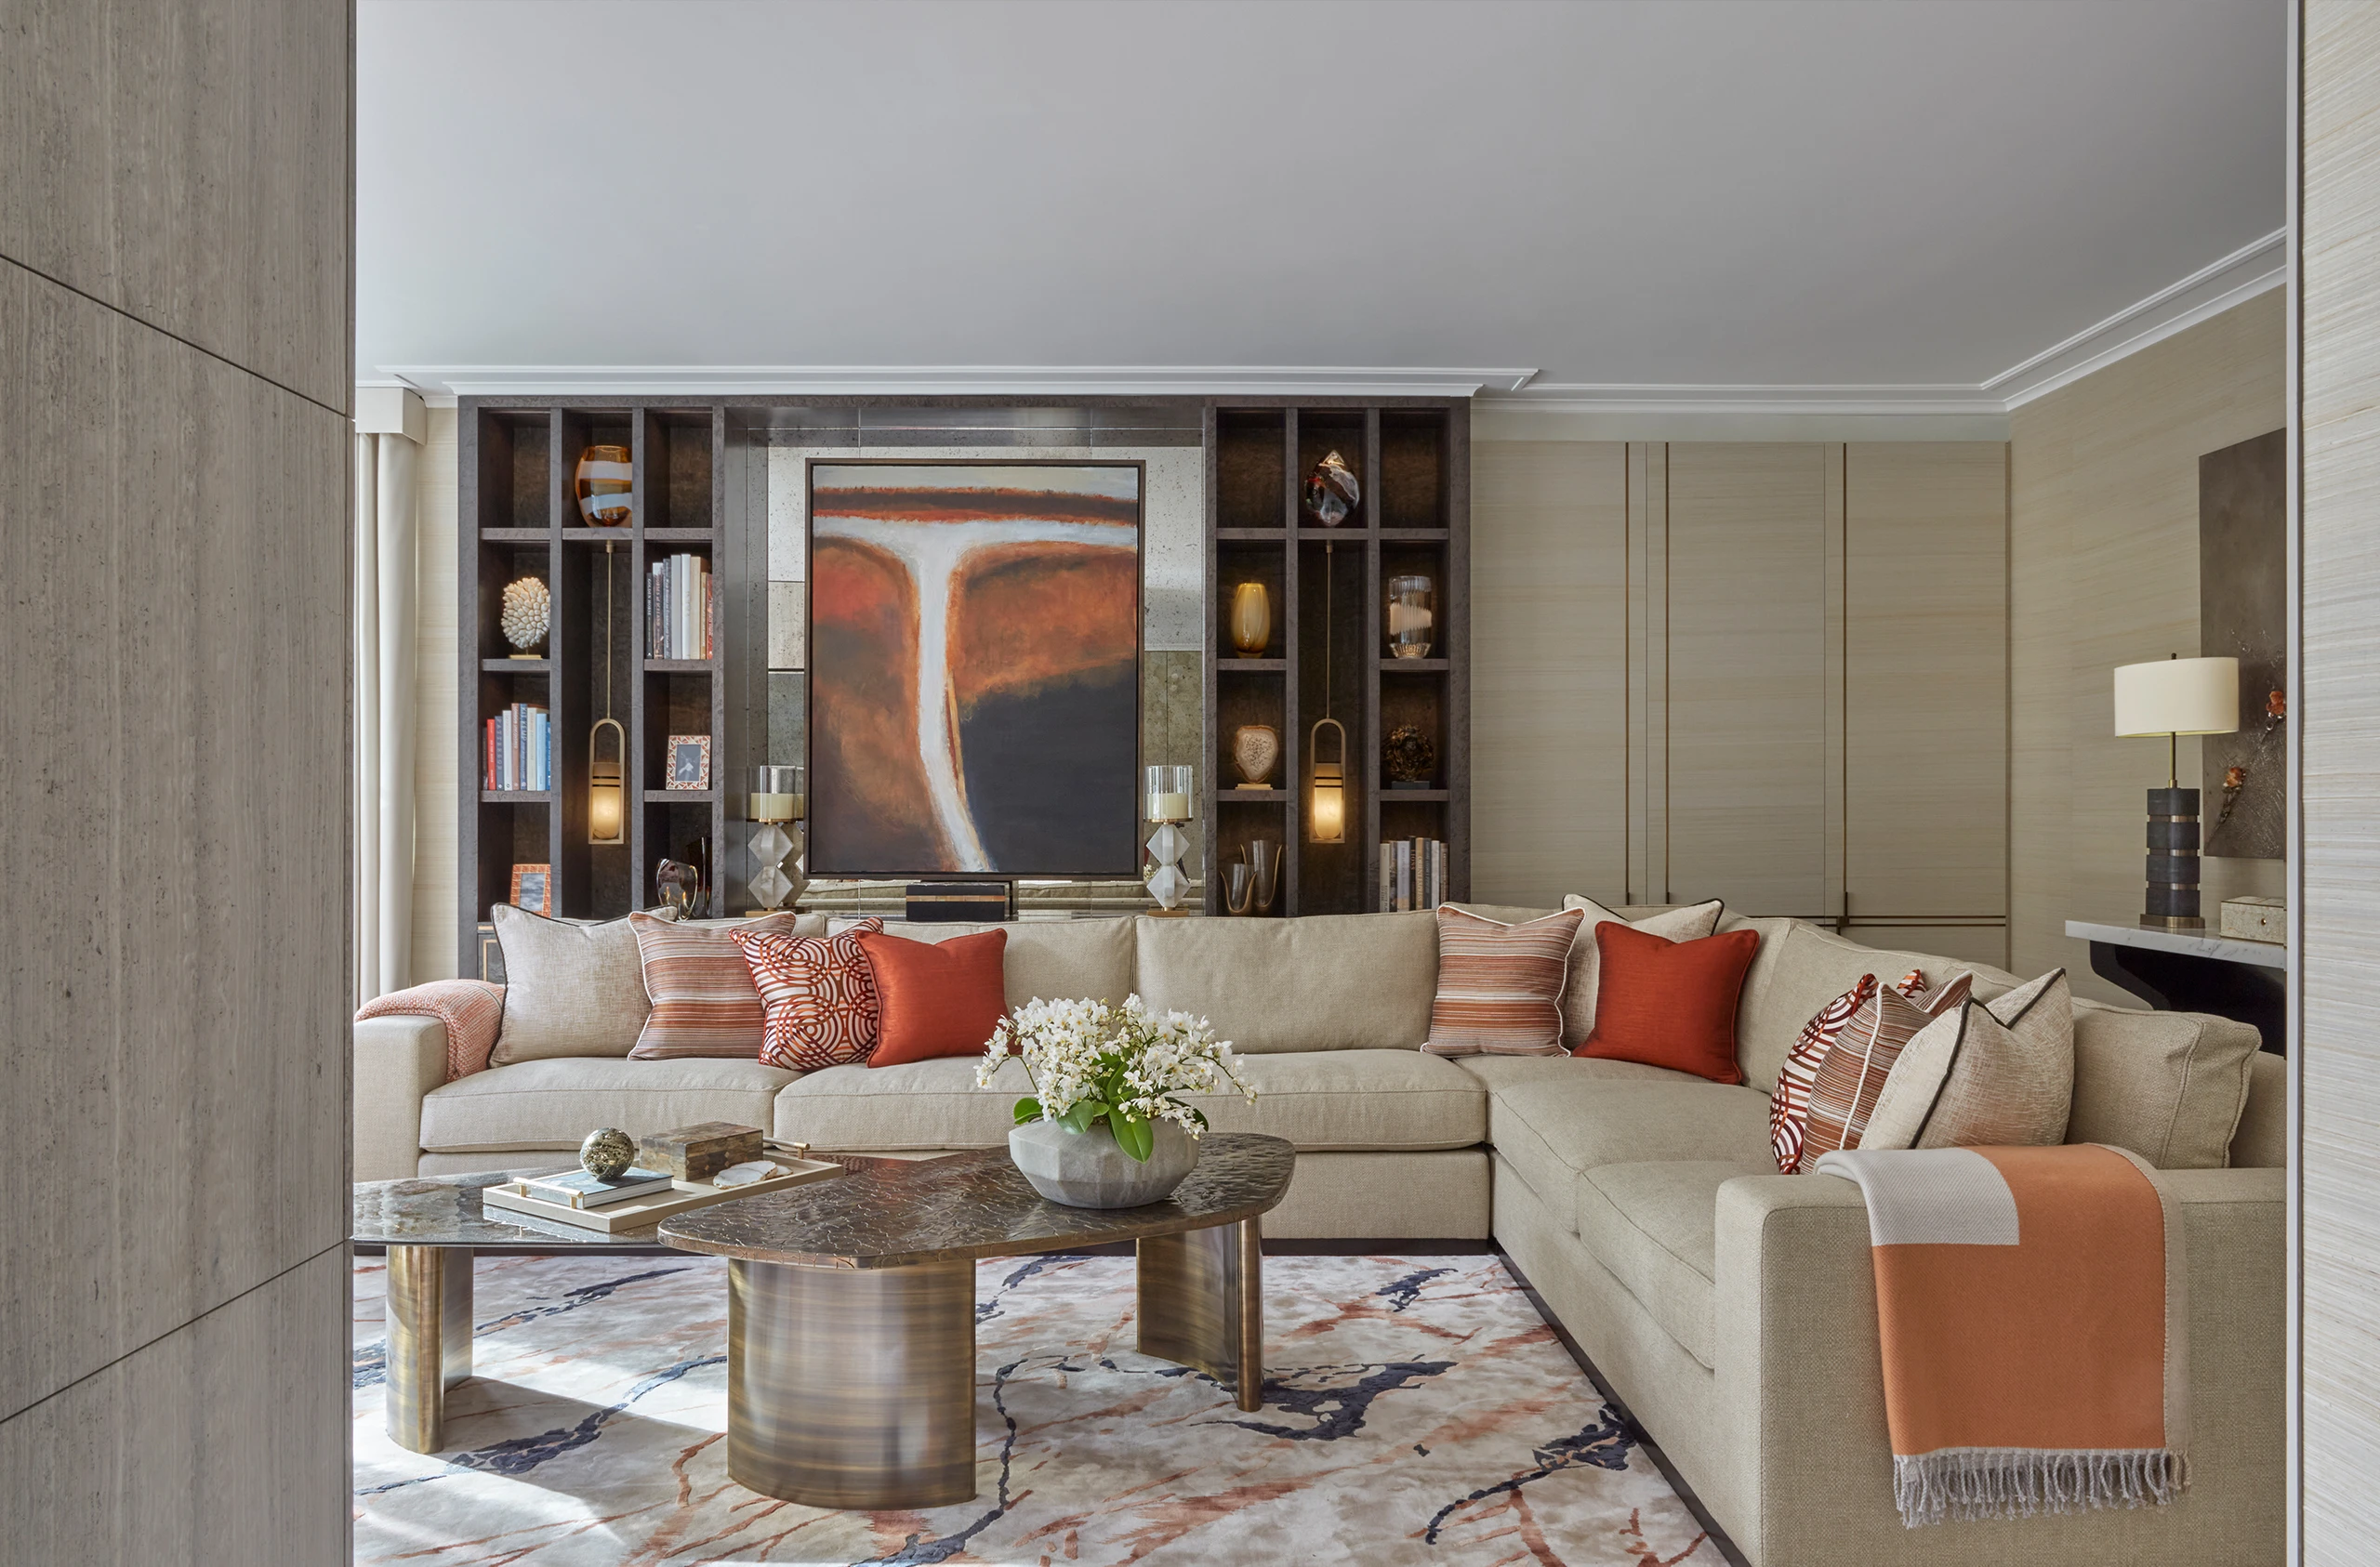 Katharine Pooley luxury interior design project london Notting Hill award winning interior design living room decor